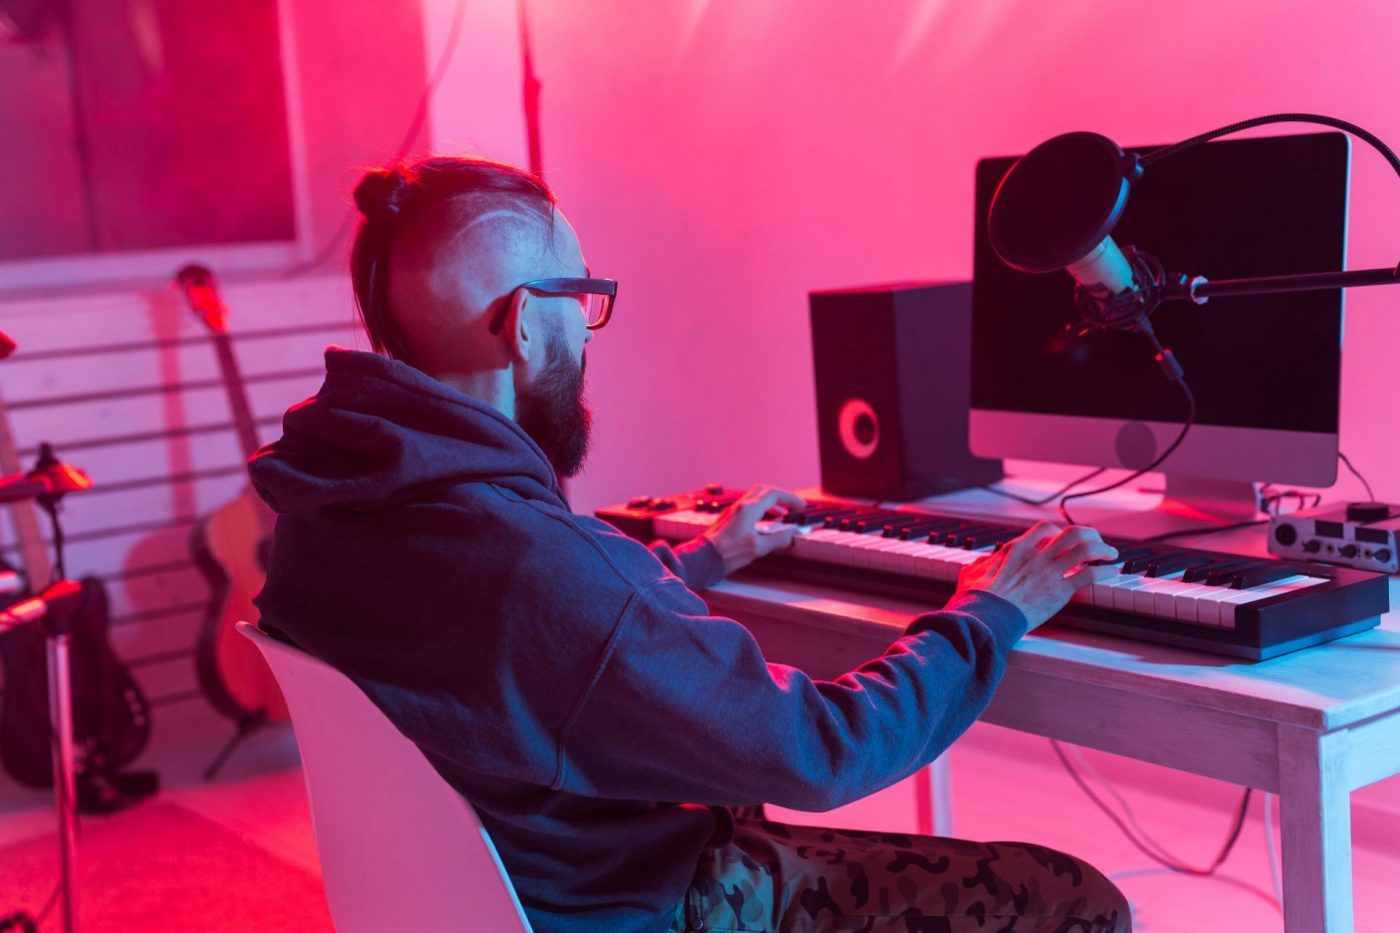 Ghost producer SkillsUni studio